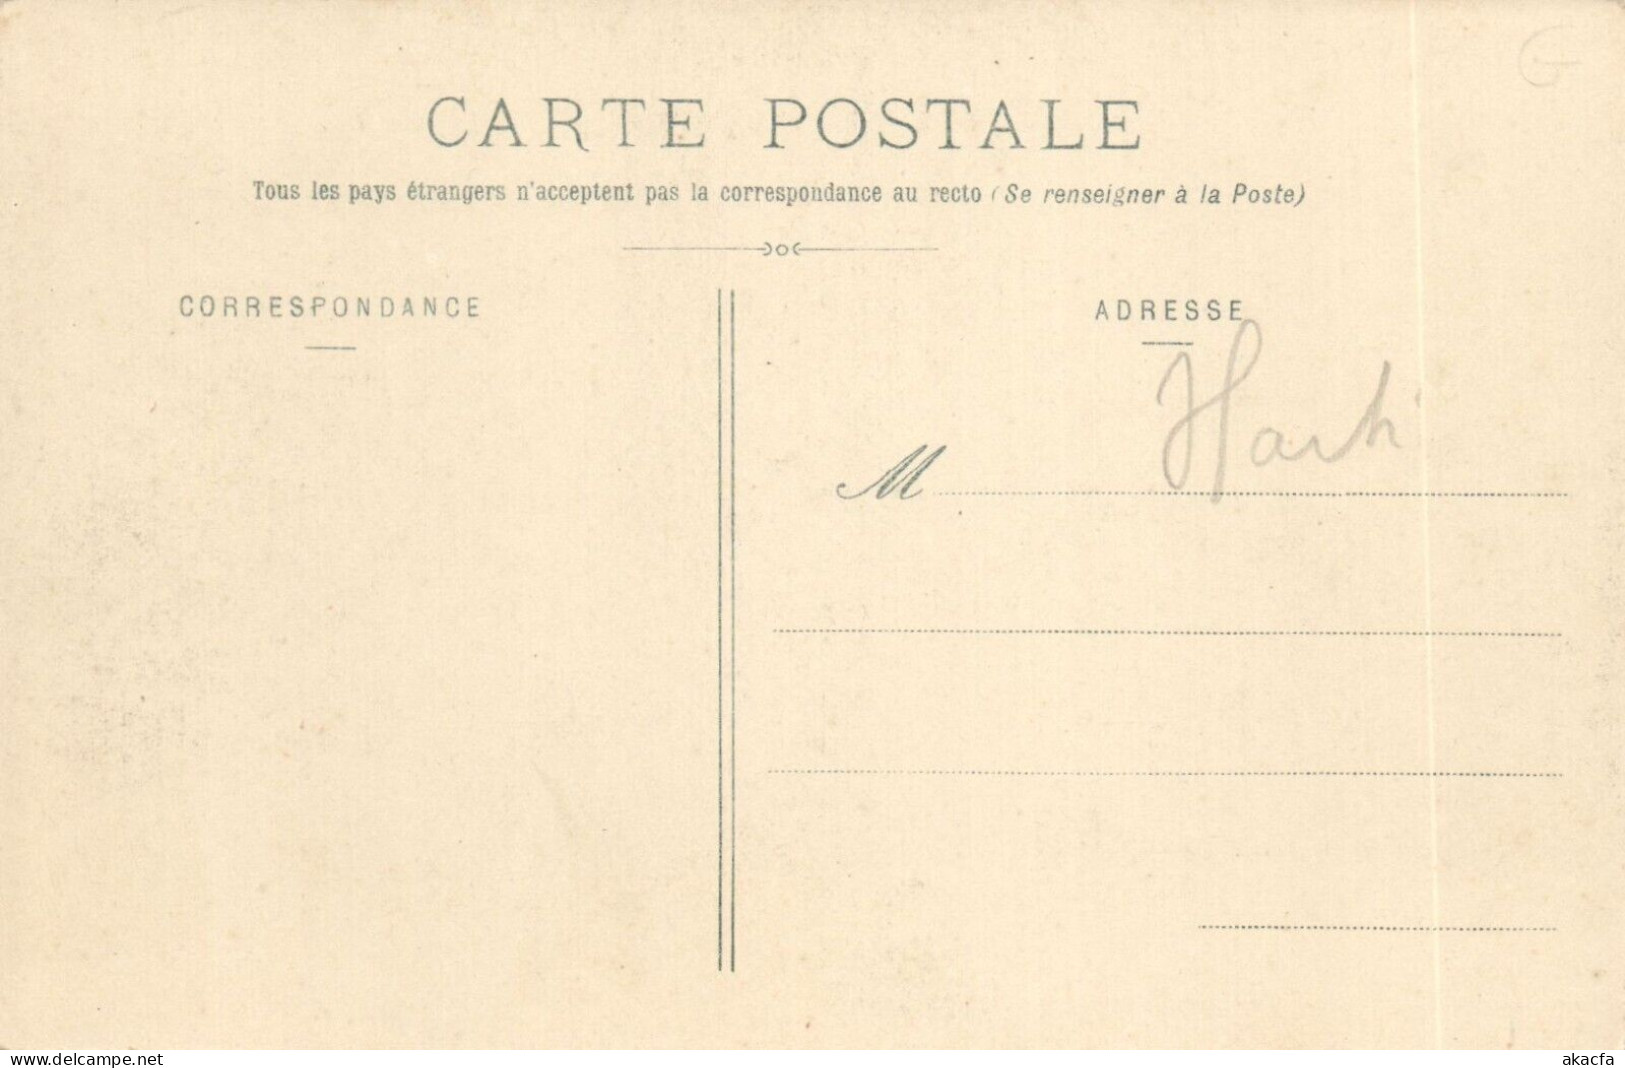 PC HAITI CARIBBEAN PORT-au-PRINCE PALACE Vintage Postcard (b52075) - Haïti